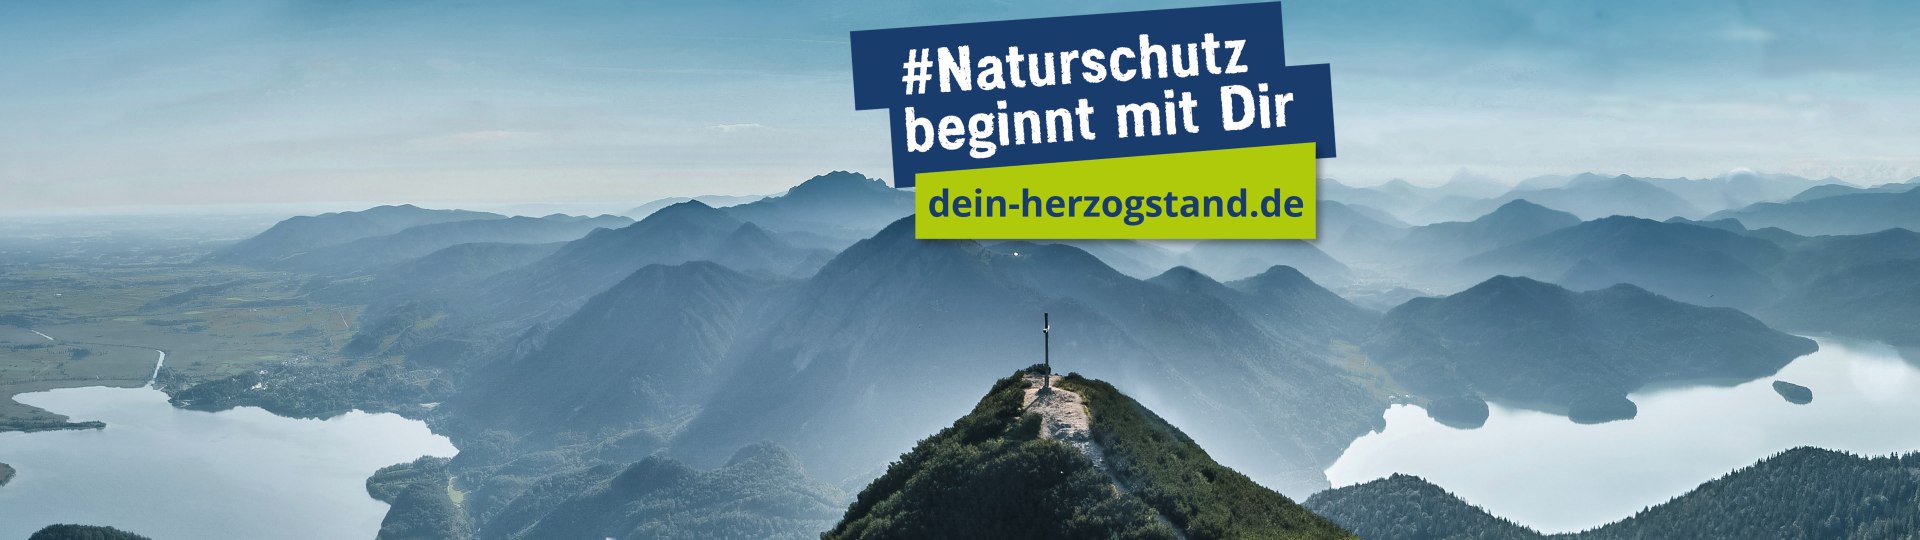 Naturschutz beginnt mit Dir, © Tourist Information Kochel a. See, Th. Kujat